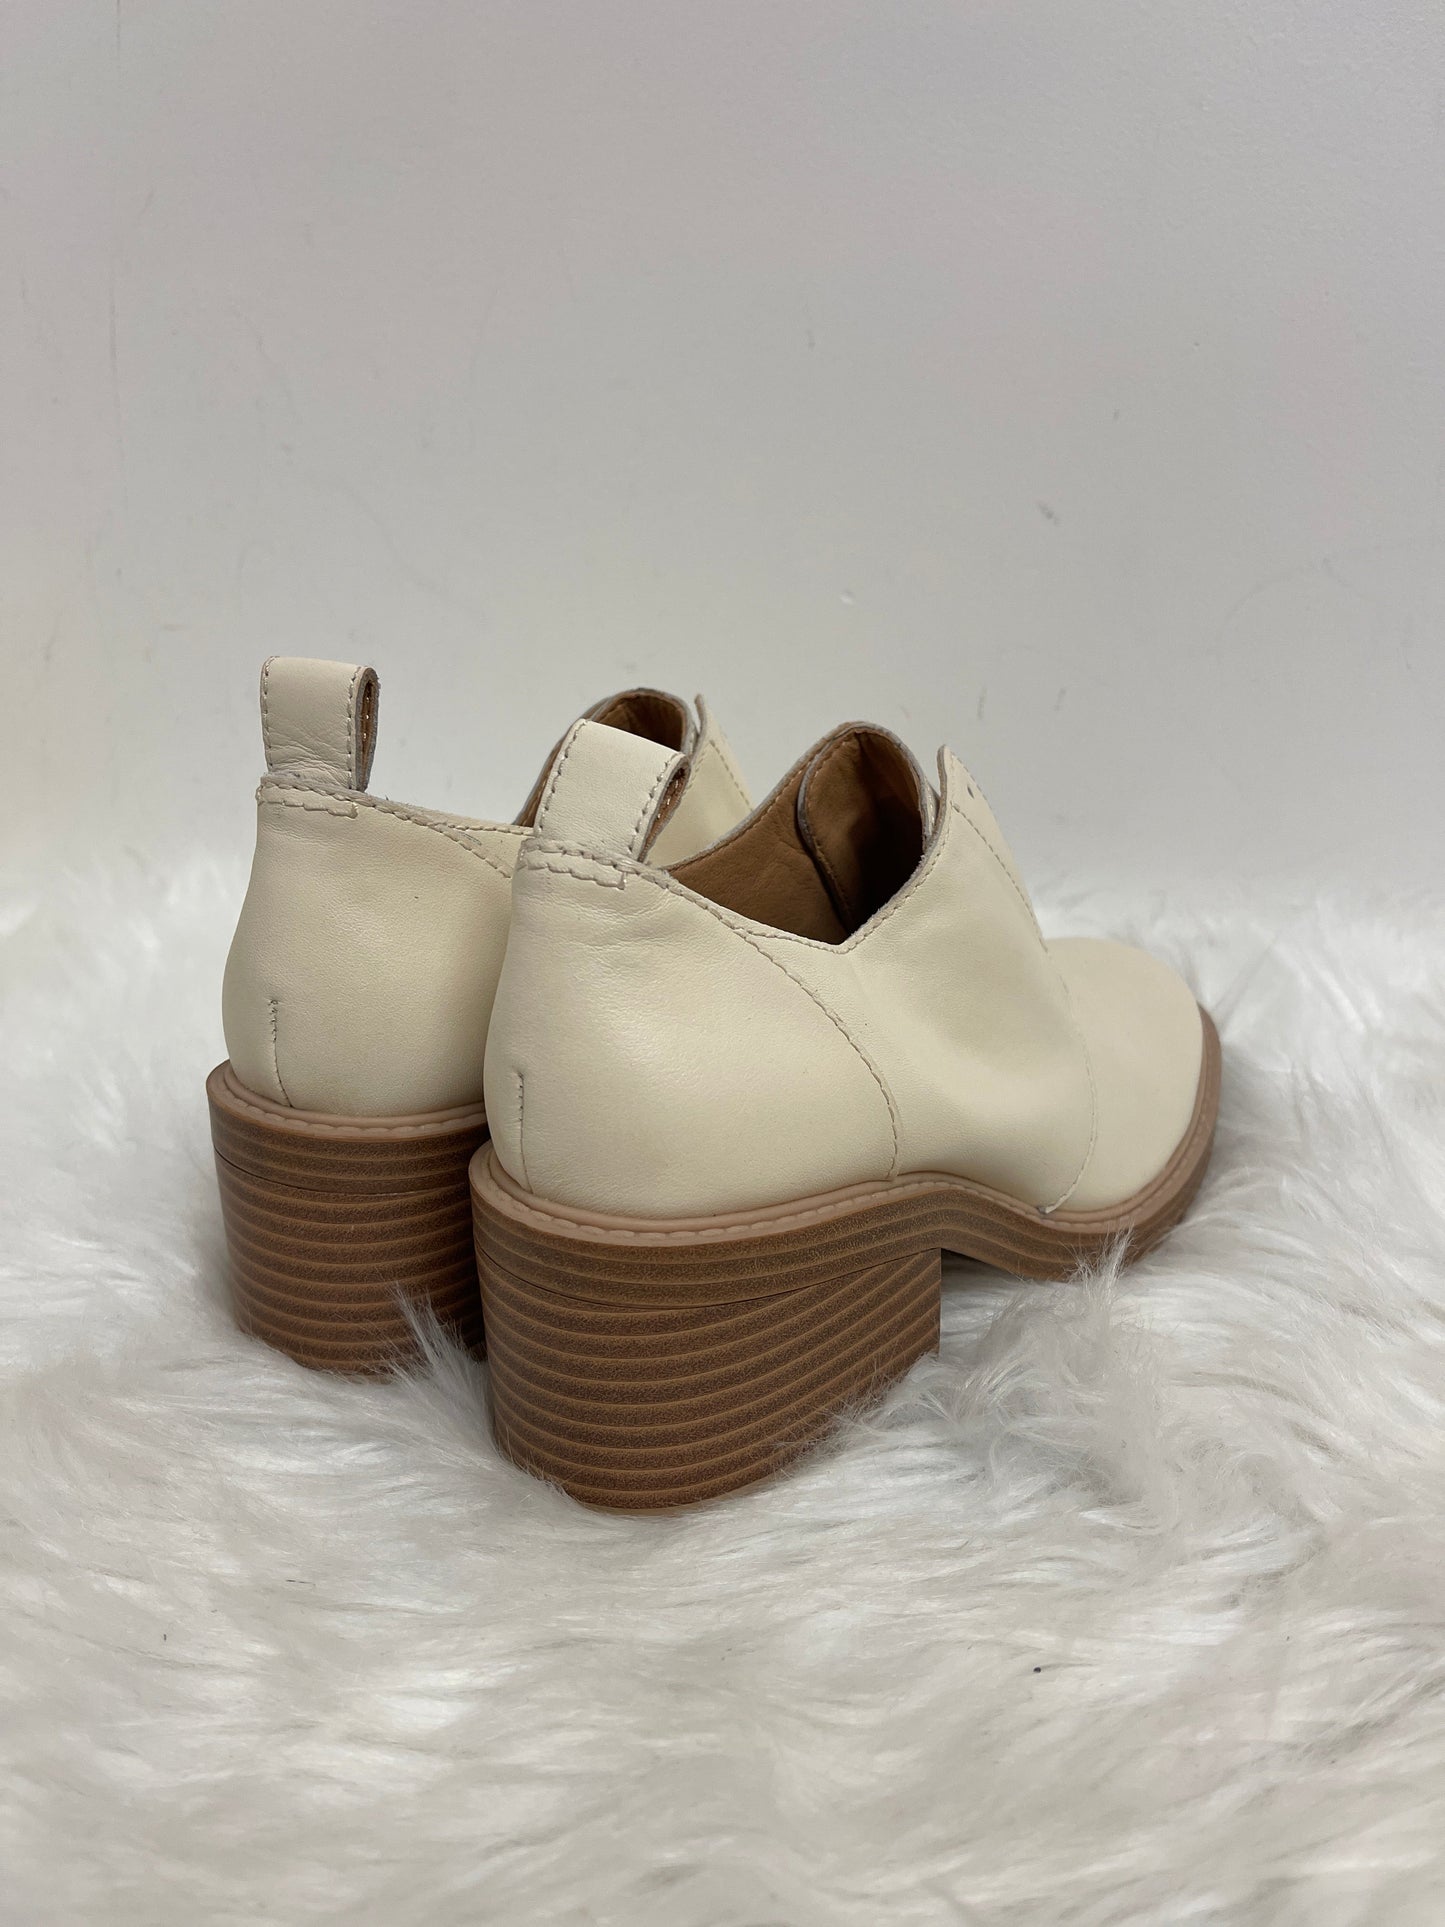 Cream Shoes Heels Block Crown Vintage, Size 6.5